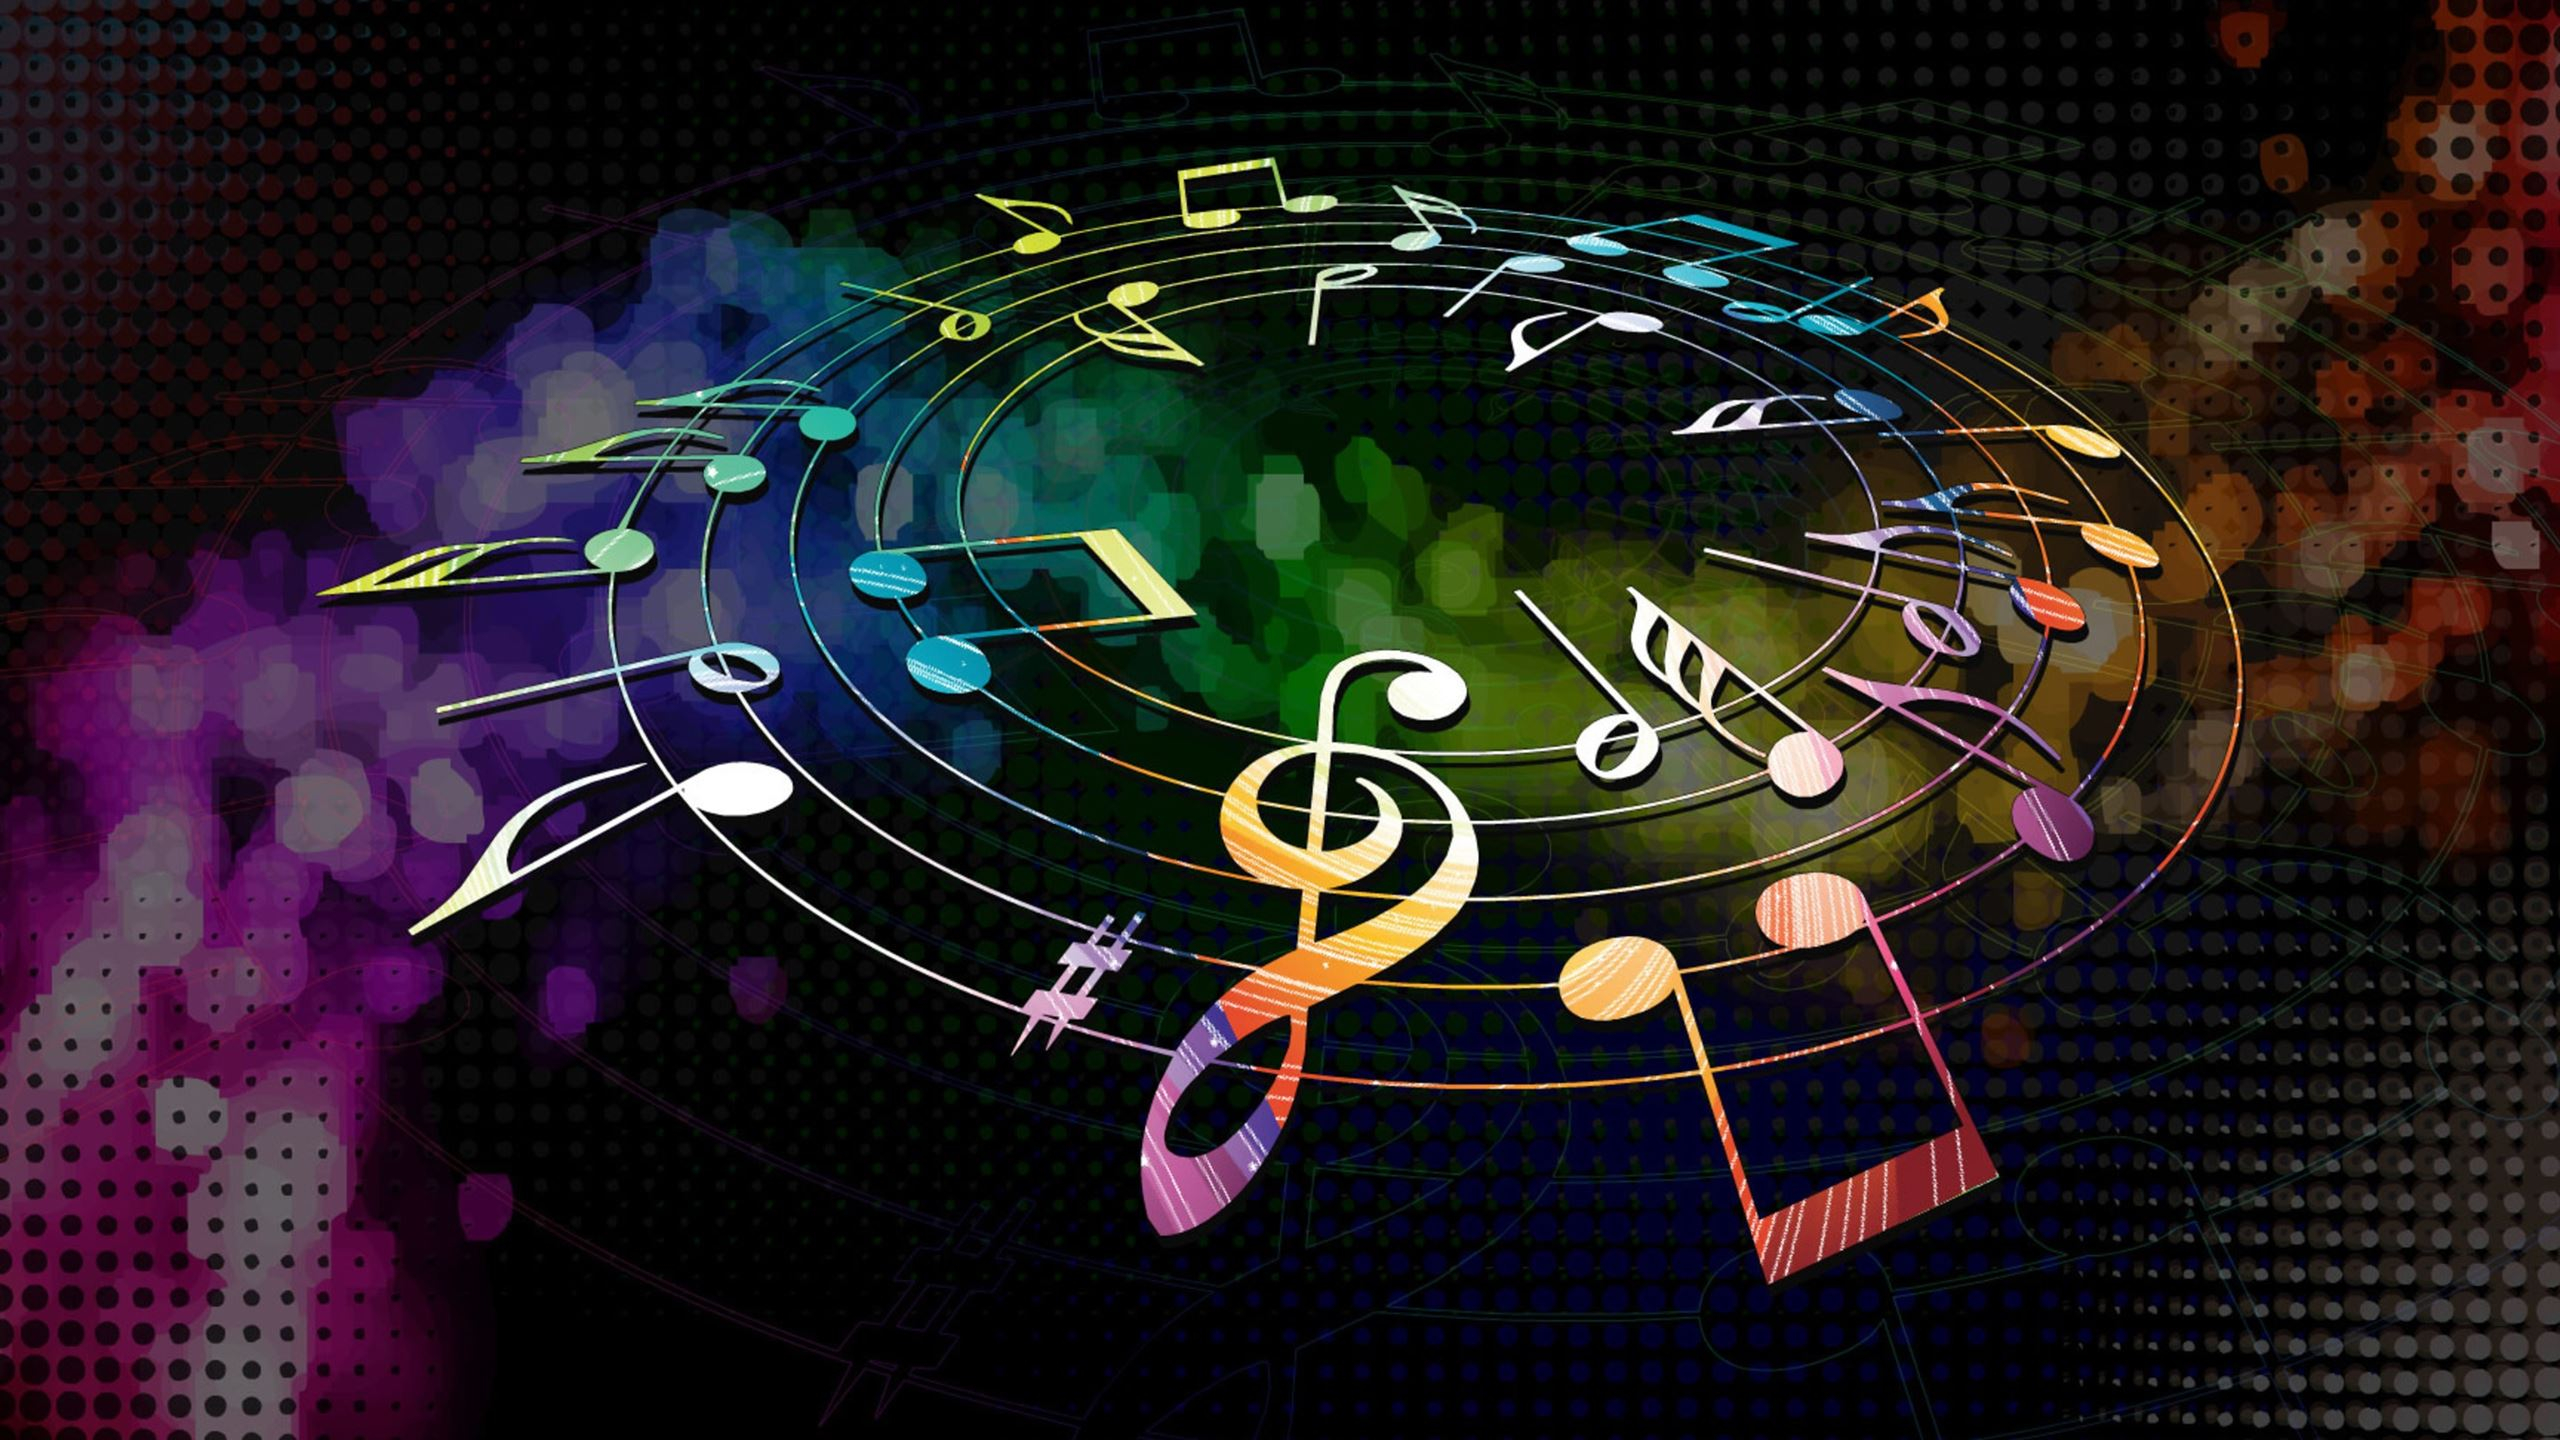 2560x1440 Colorful Musical Notes MacBook Air Wallpaper Download